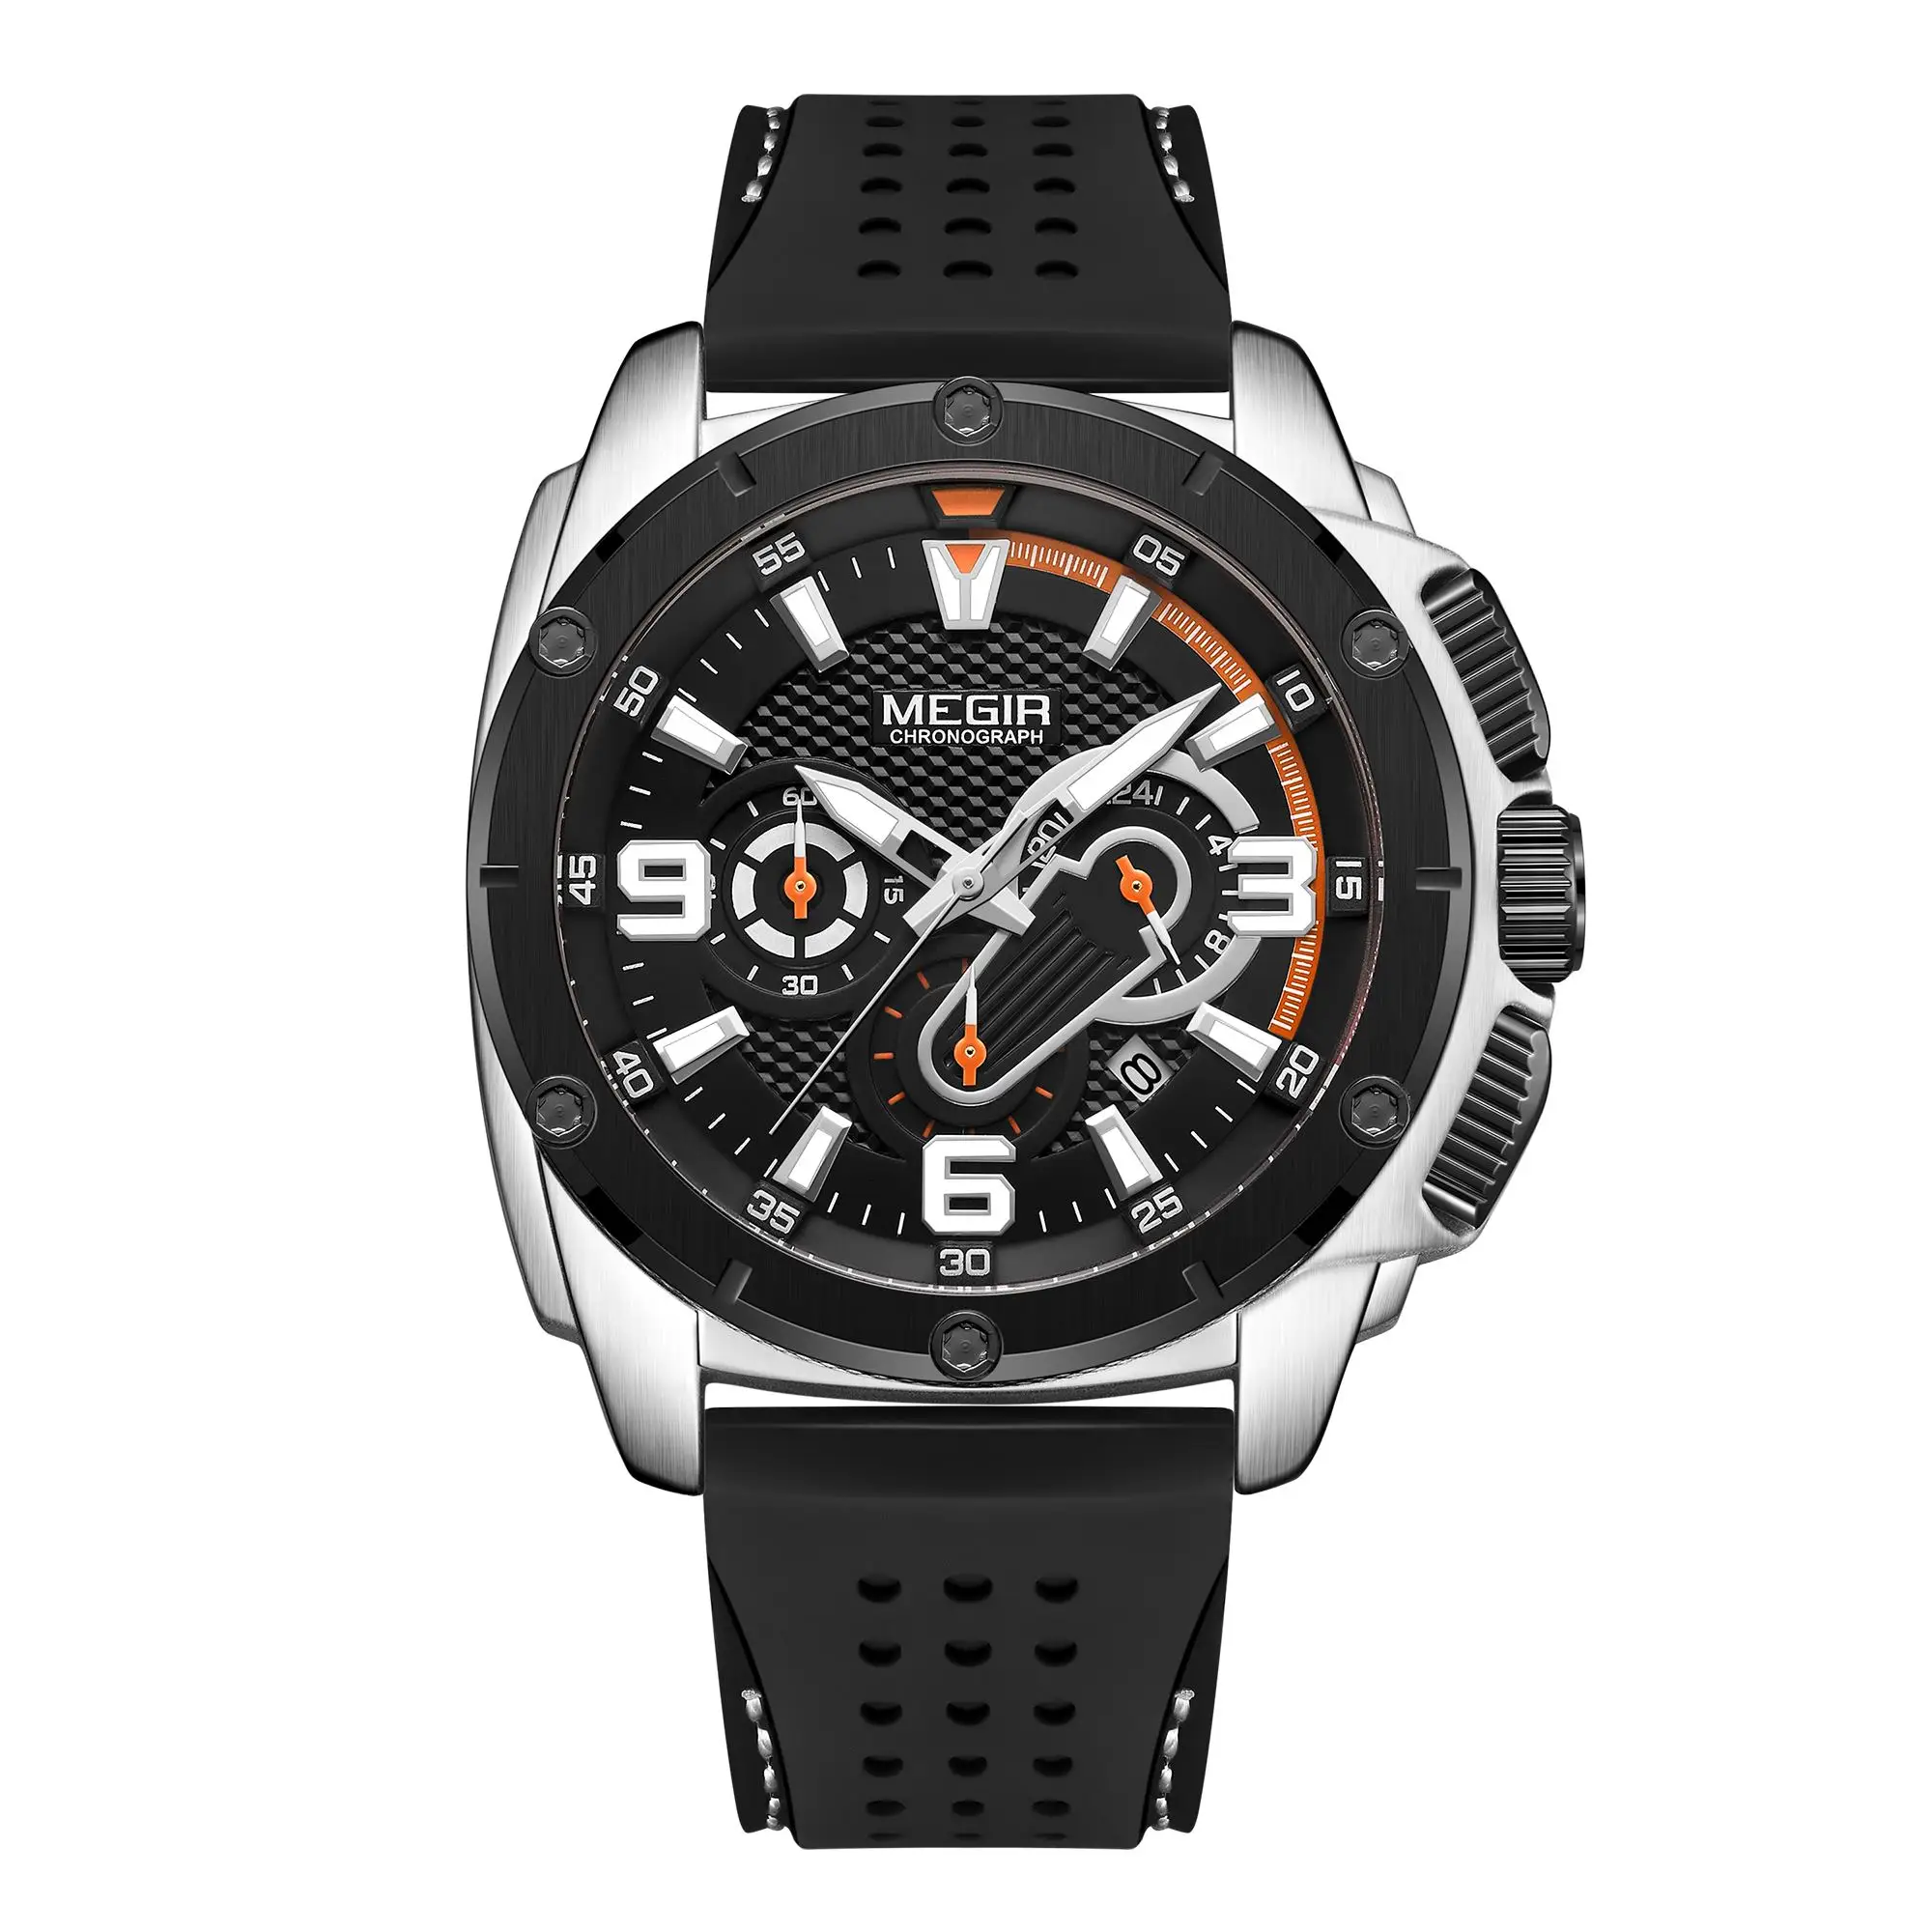 

Relojes Hombre MEGIR 2147 Original Brand Fashion Silicone Chronograph Sport Watches Quartz Luxury Military Men Watch For 2021, Black, rose gold, silver